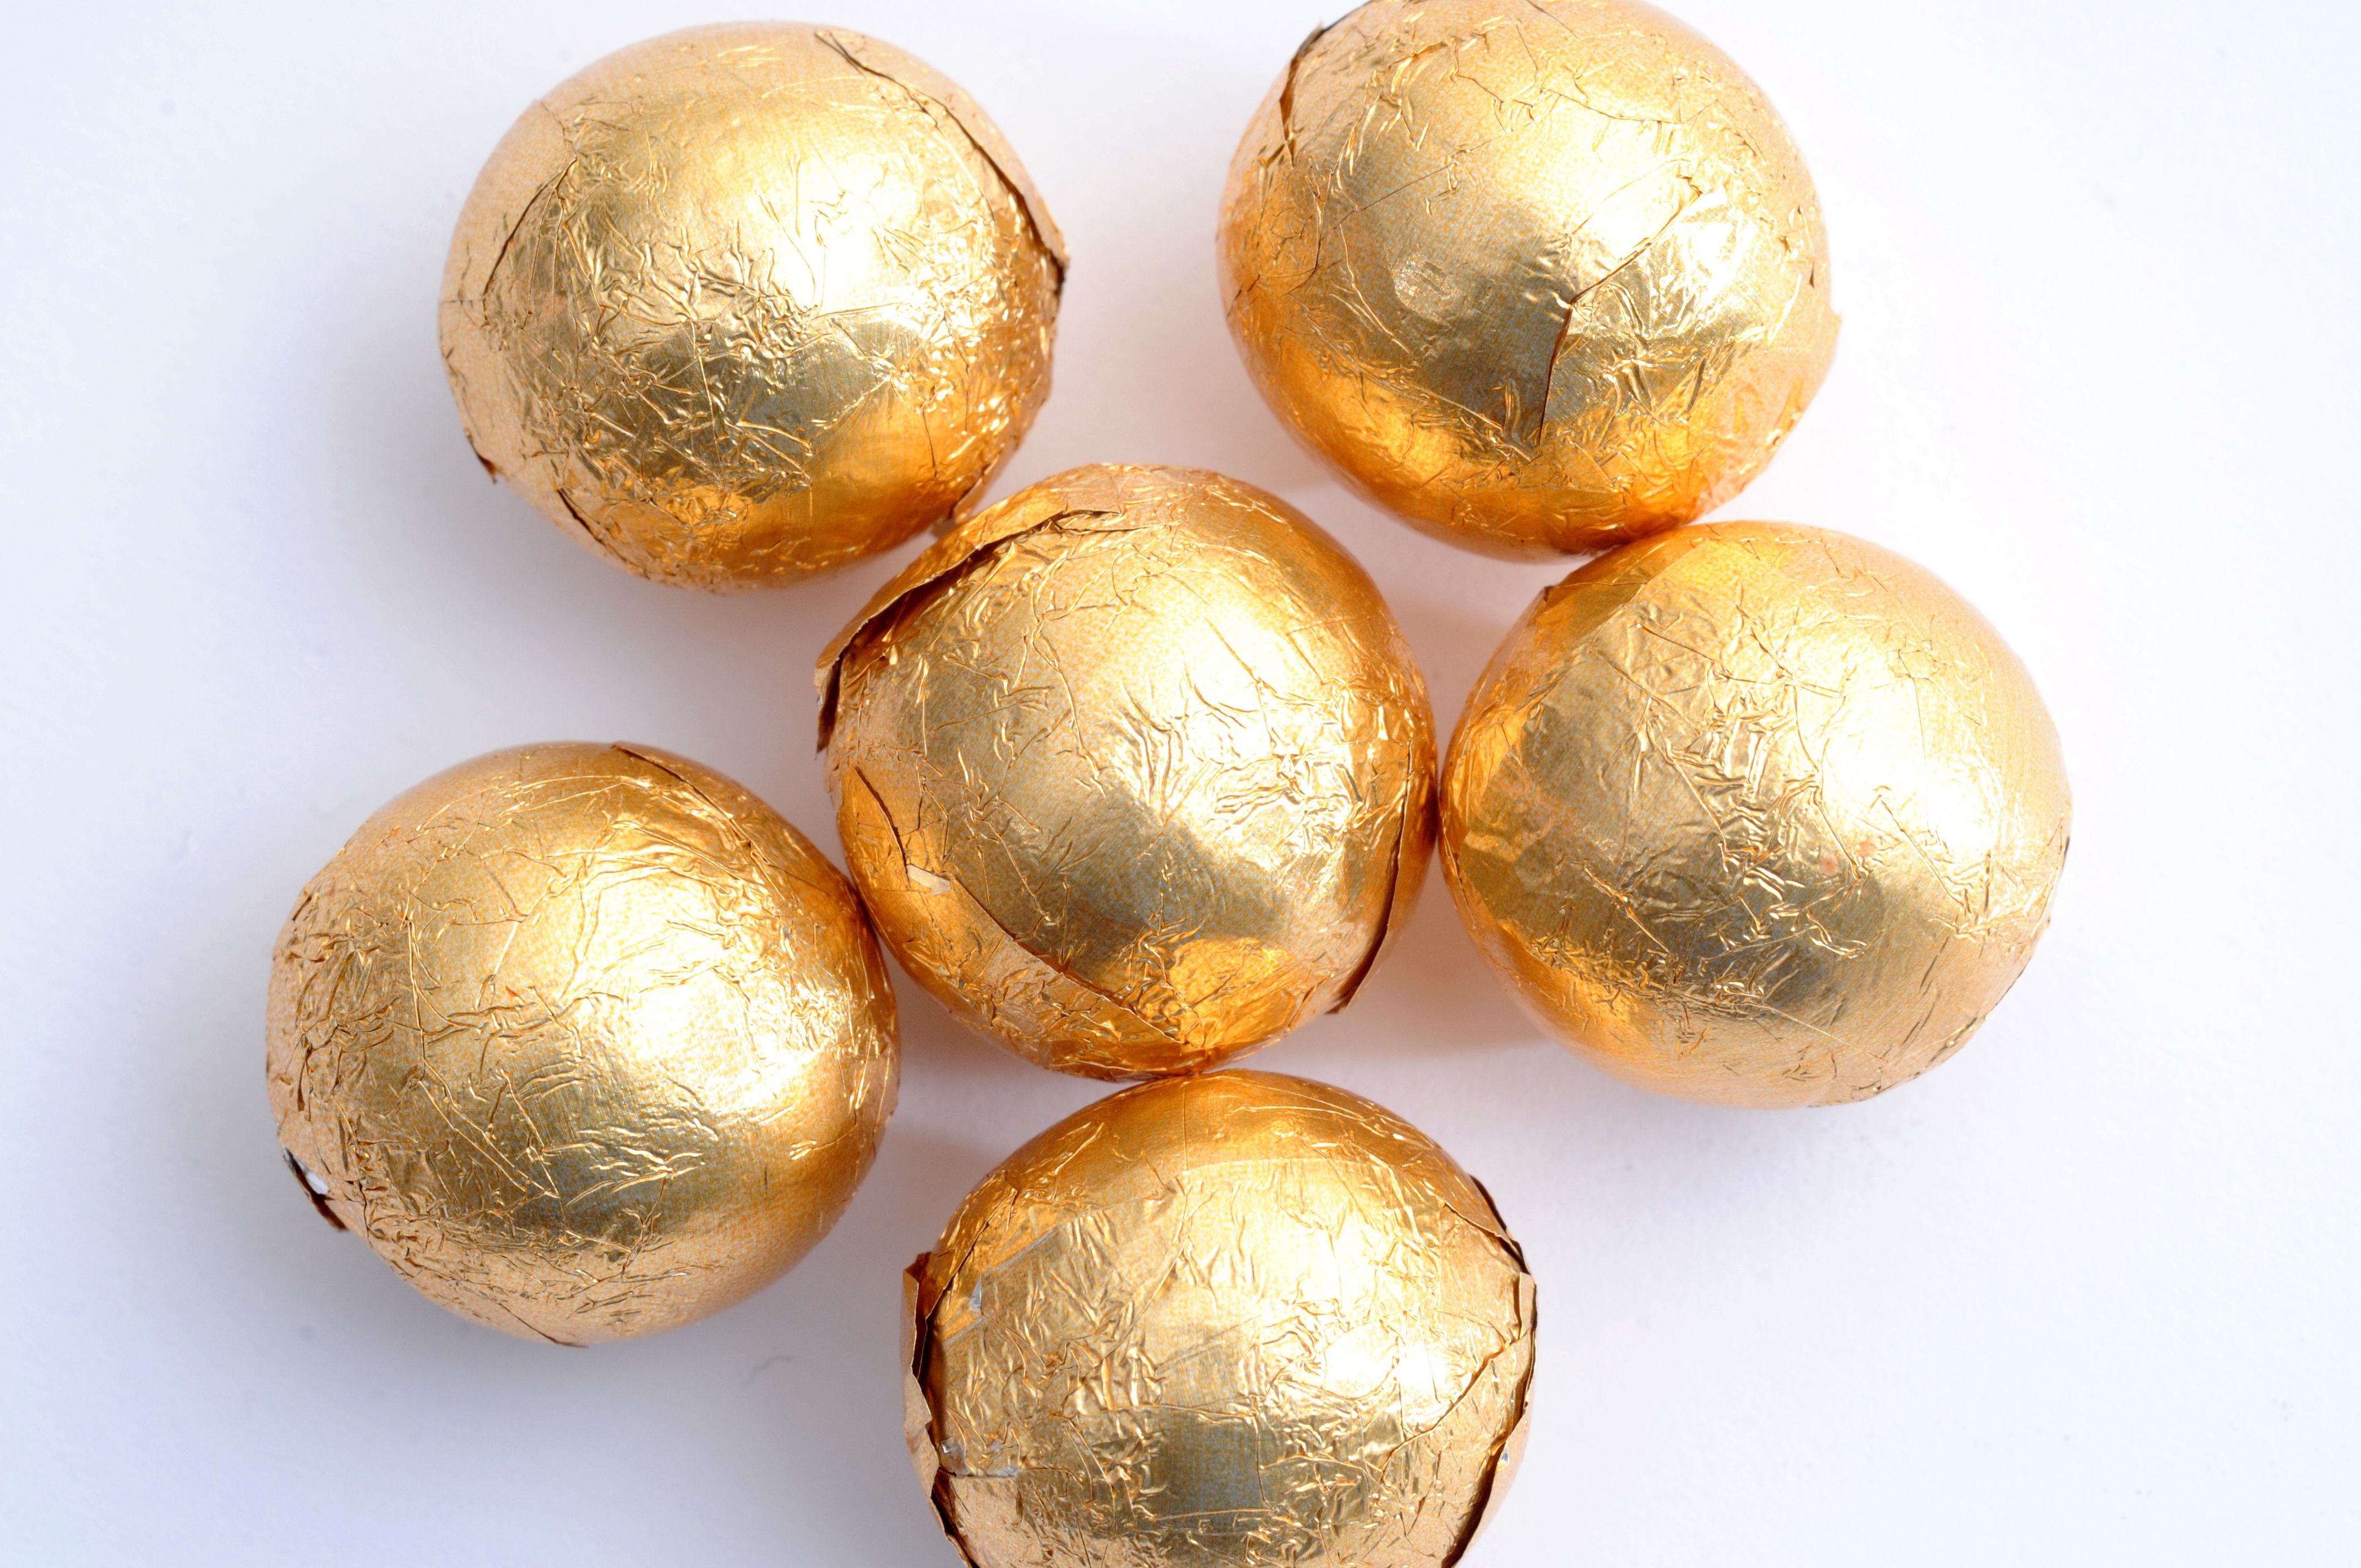 MILK CHOCOLATE GOLD BALLS (KINNERTON) 3KG